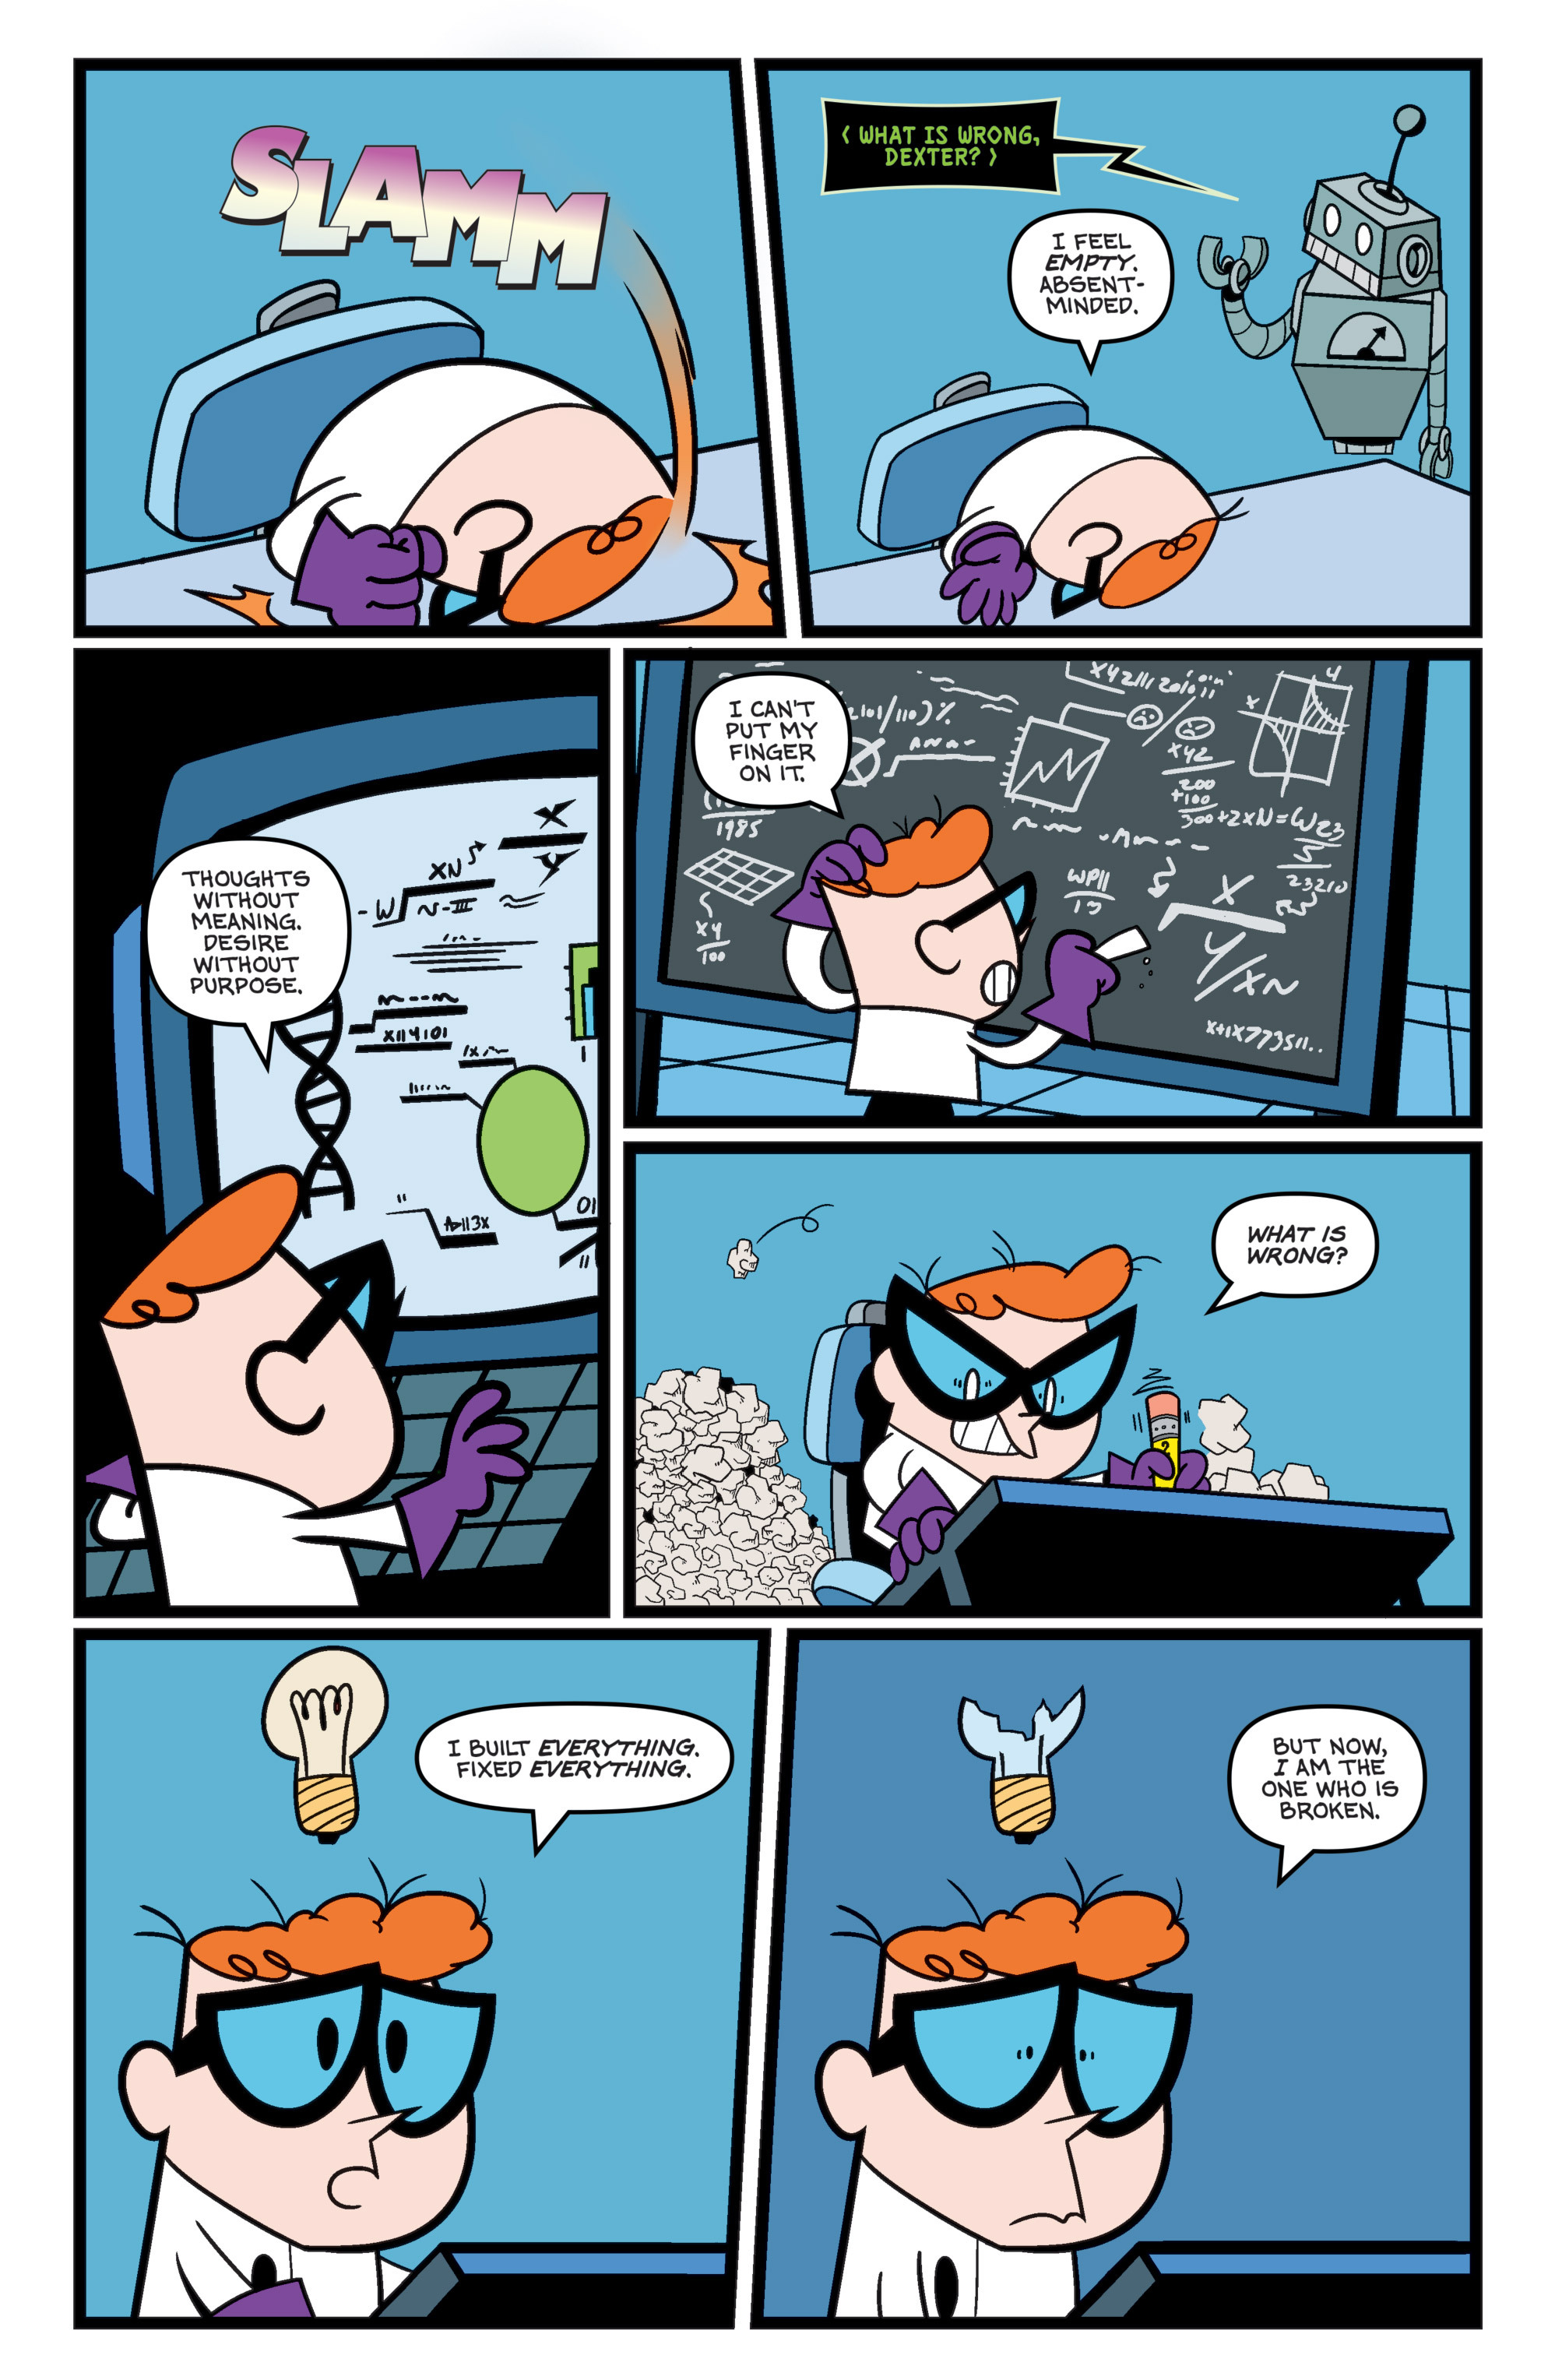 Read Online Dexters Laboratory 2014 Comic Issue 2